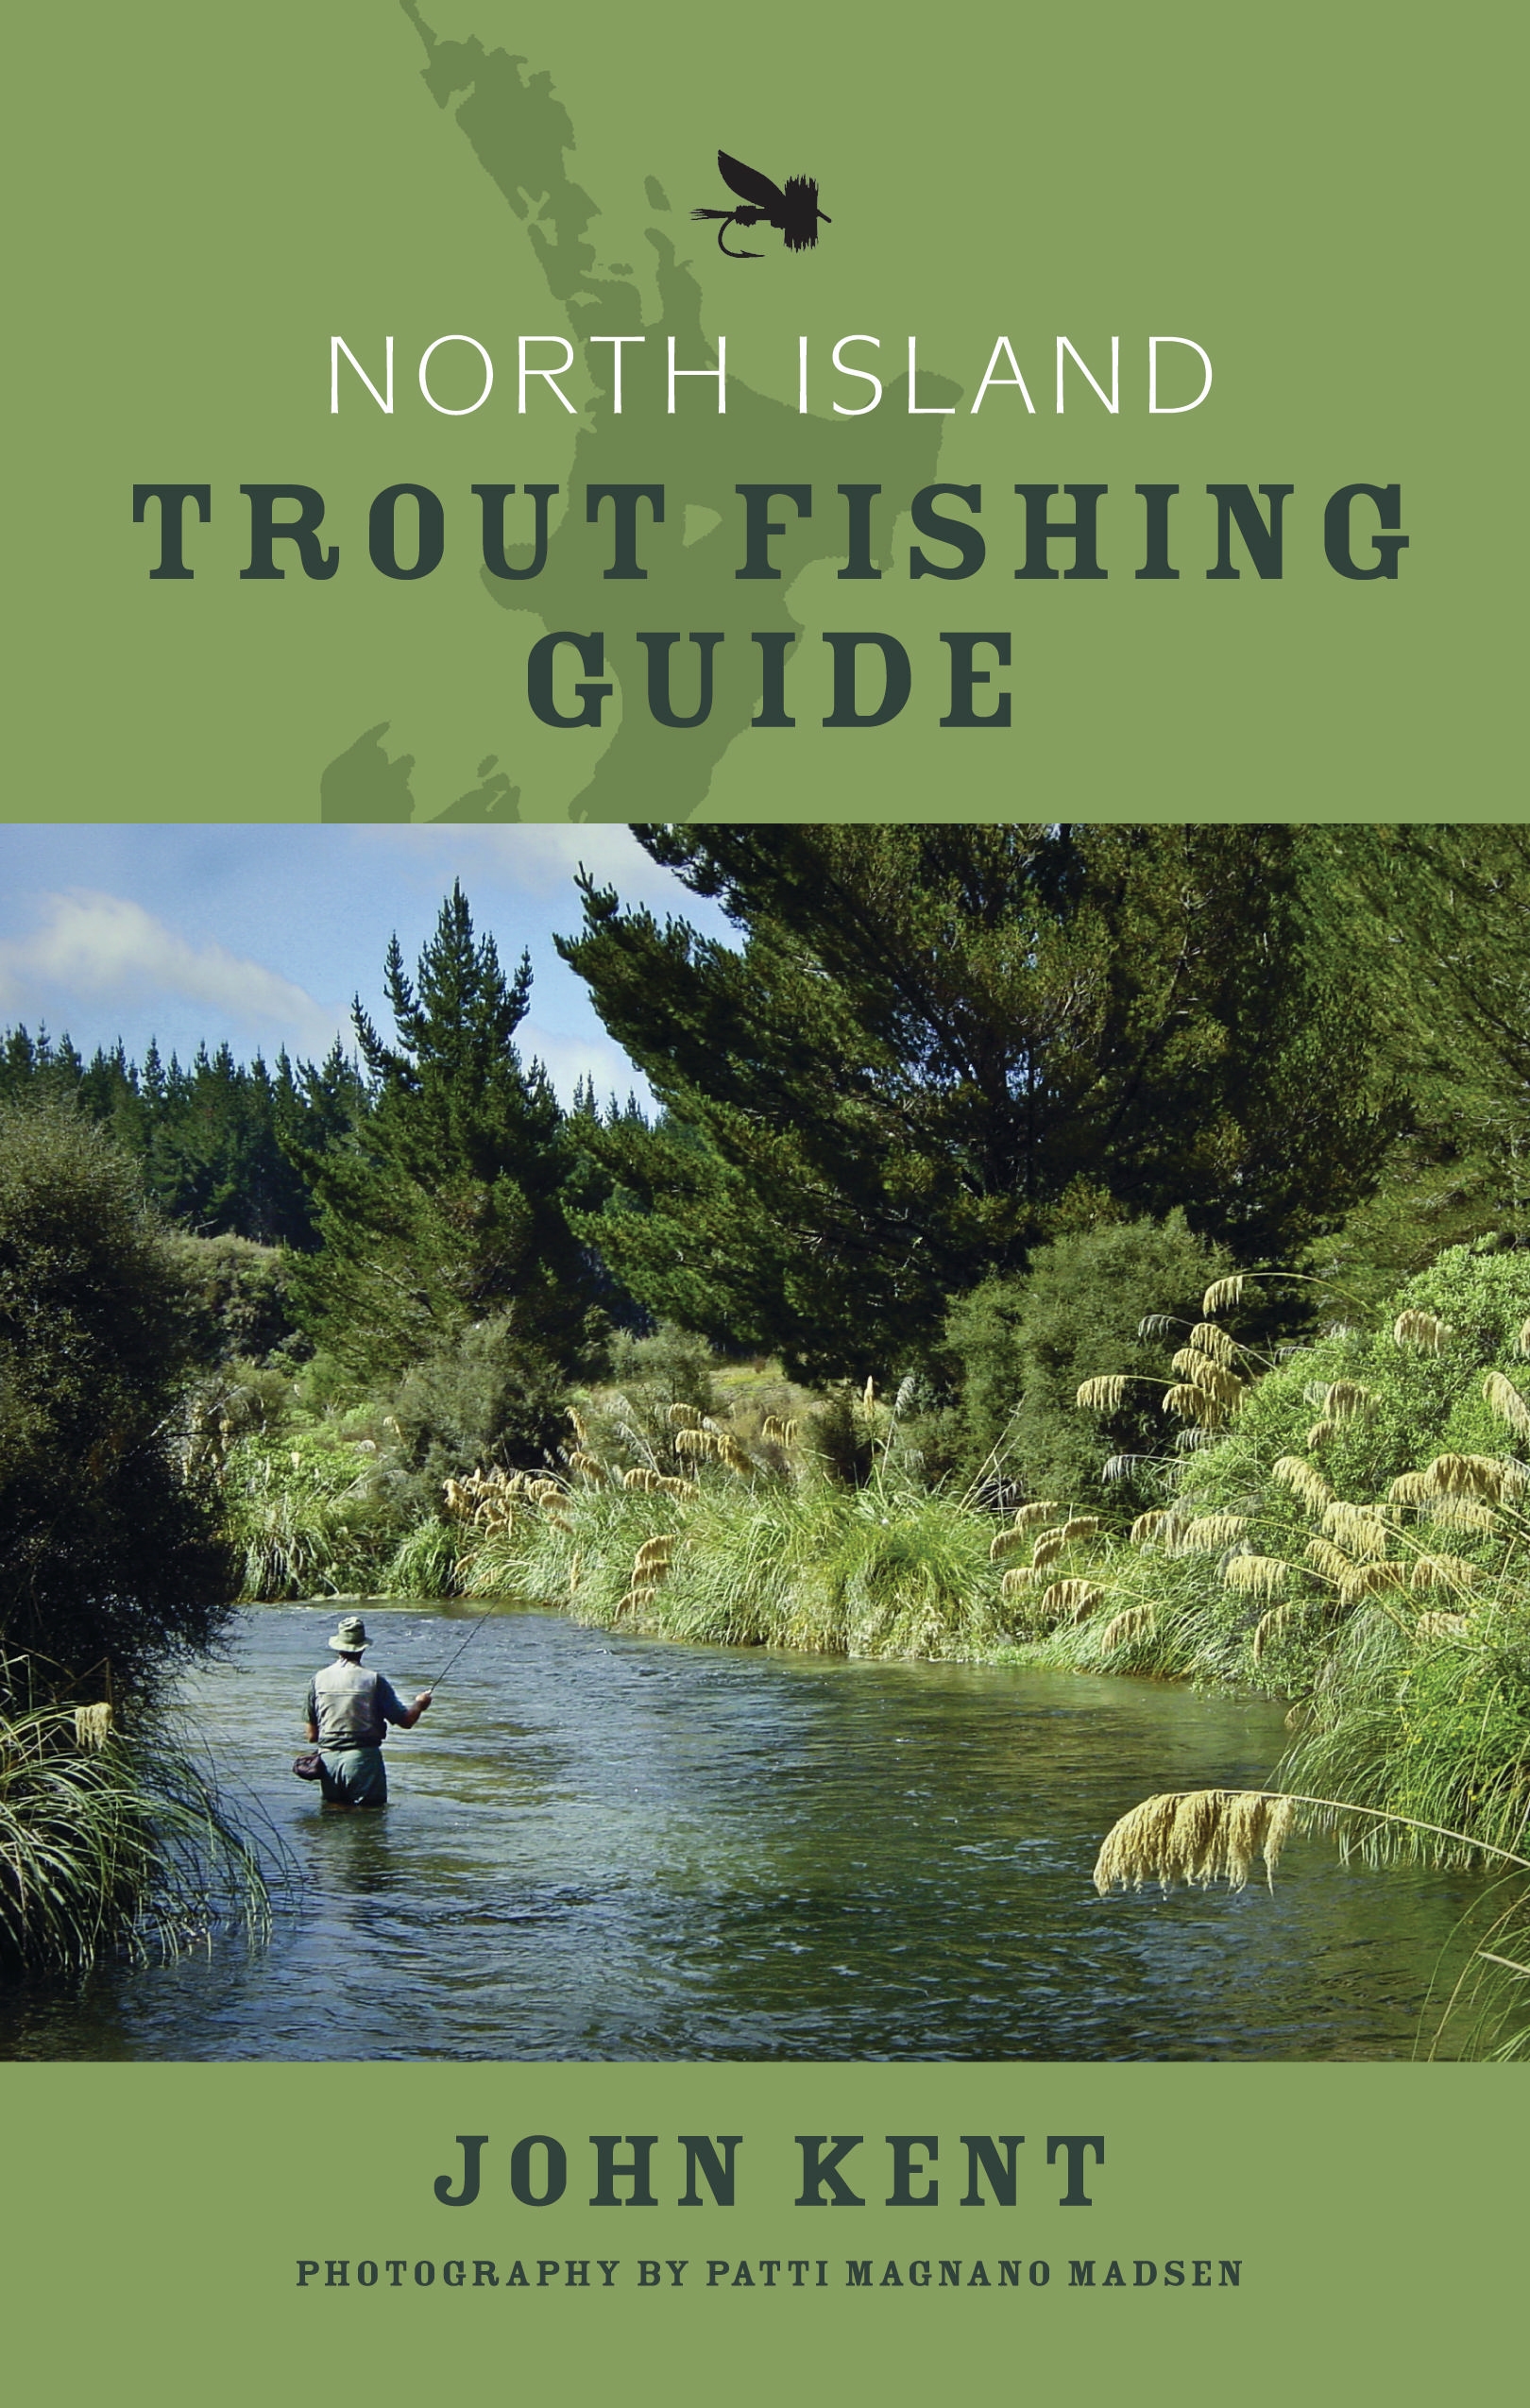 North Island Trout Fishing Guide by John Kent - Penguin Books Australia